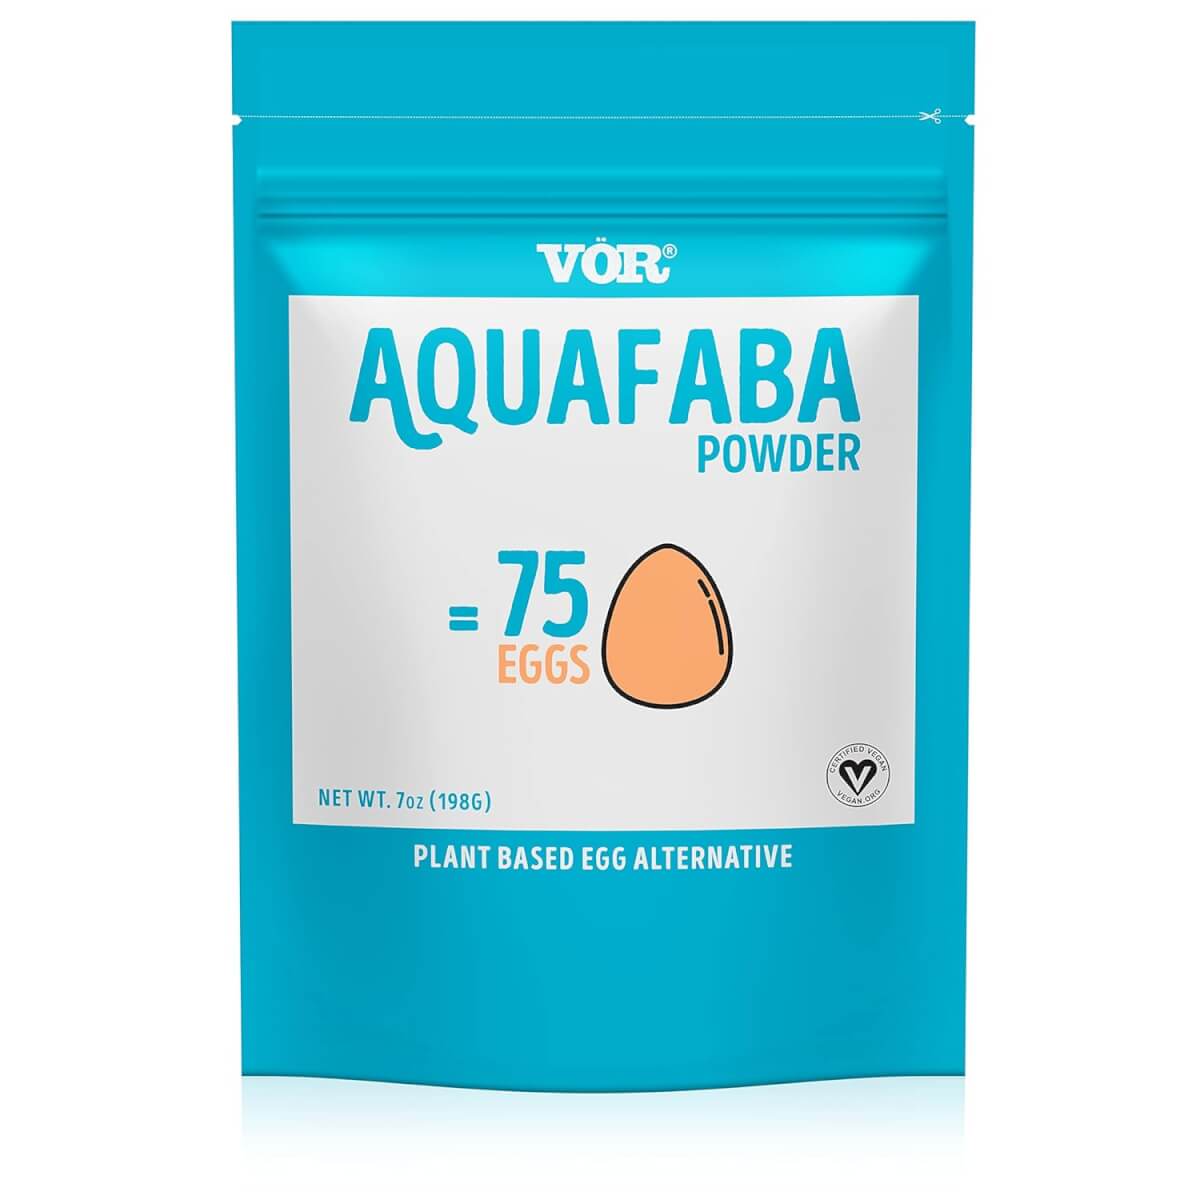 Aquafaba powder